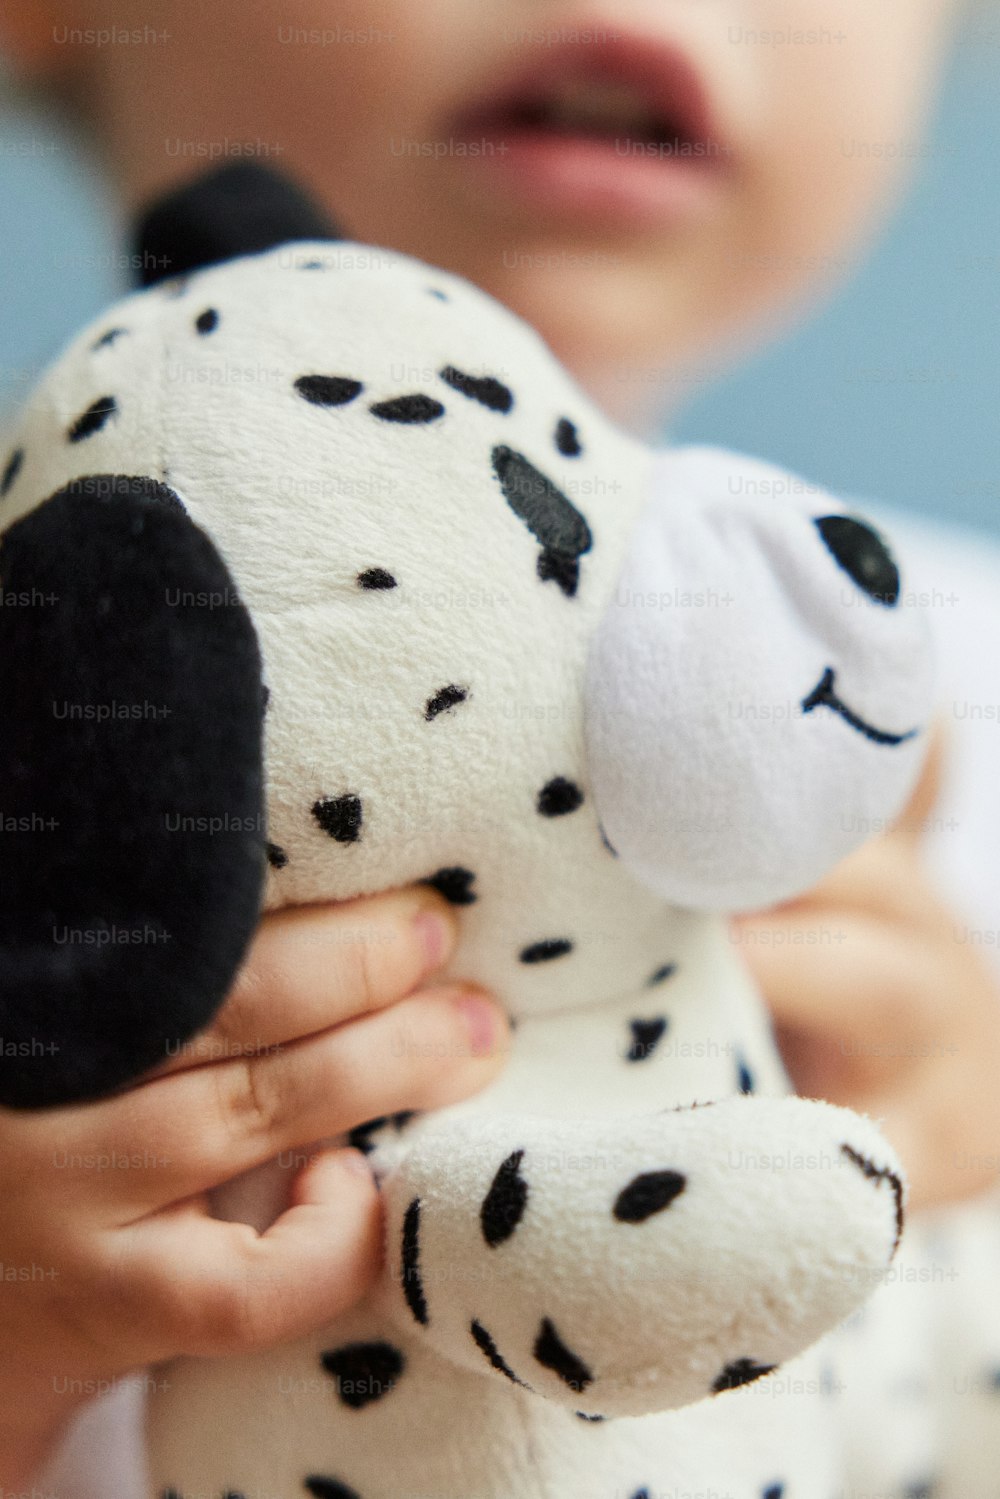 a small child holding a stuffed dalmatian dog